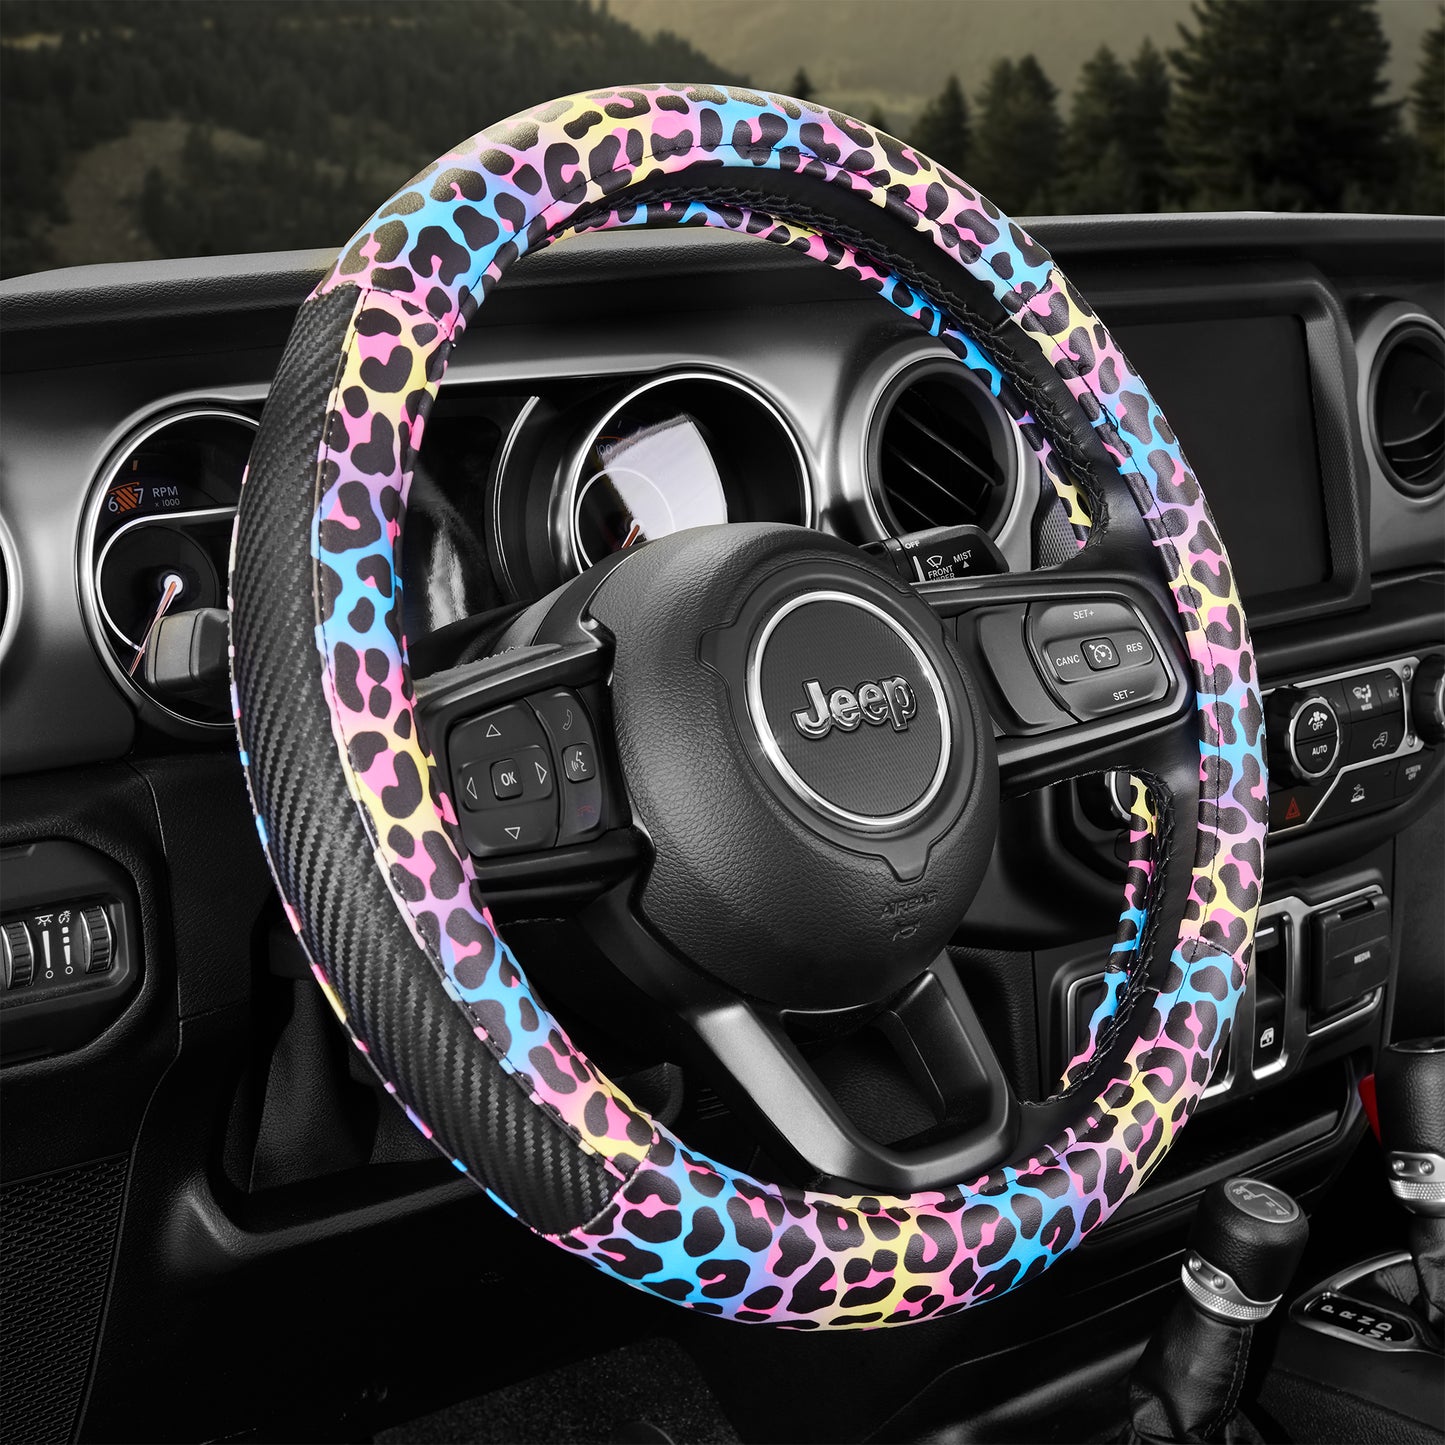 Leopard Remix Steering Wheel Cover